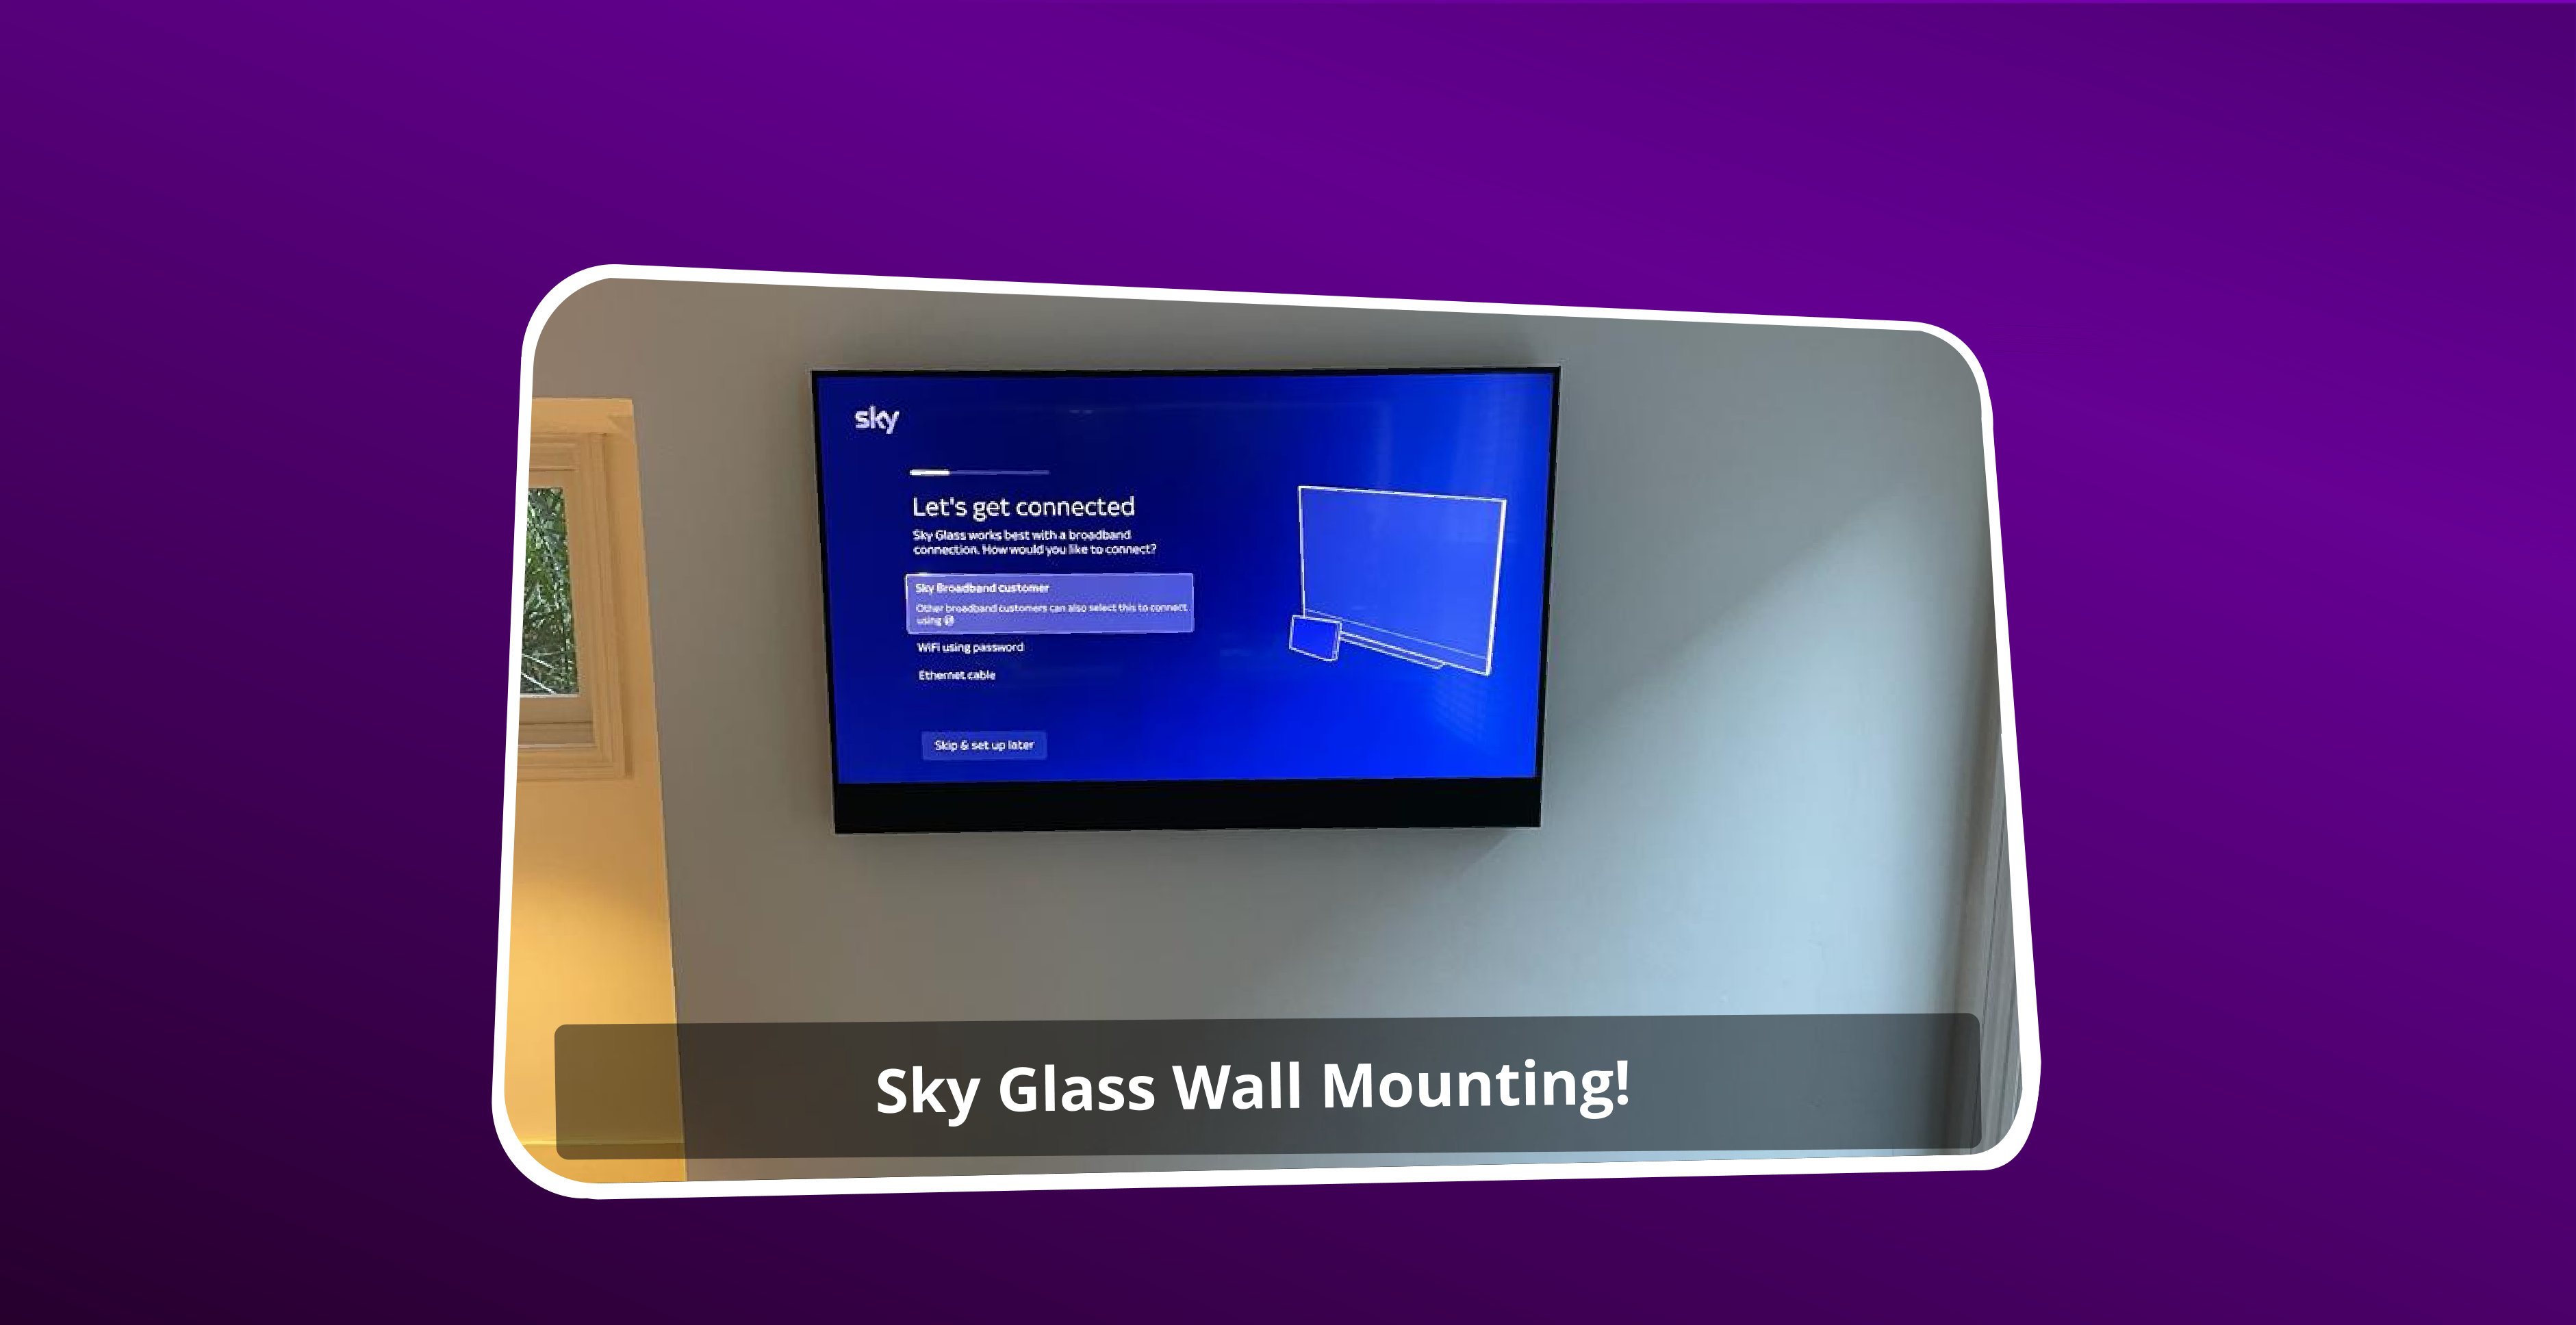 Sky Glass Wall Mounting